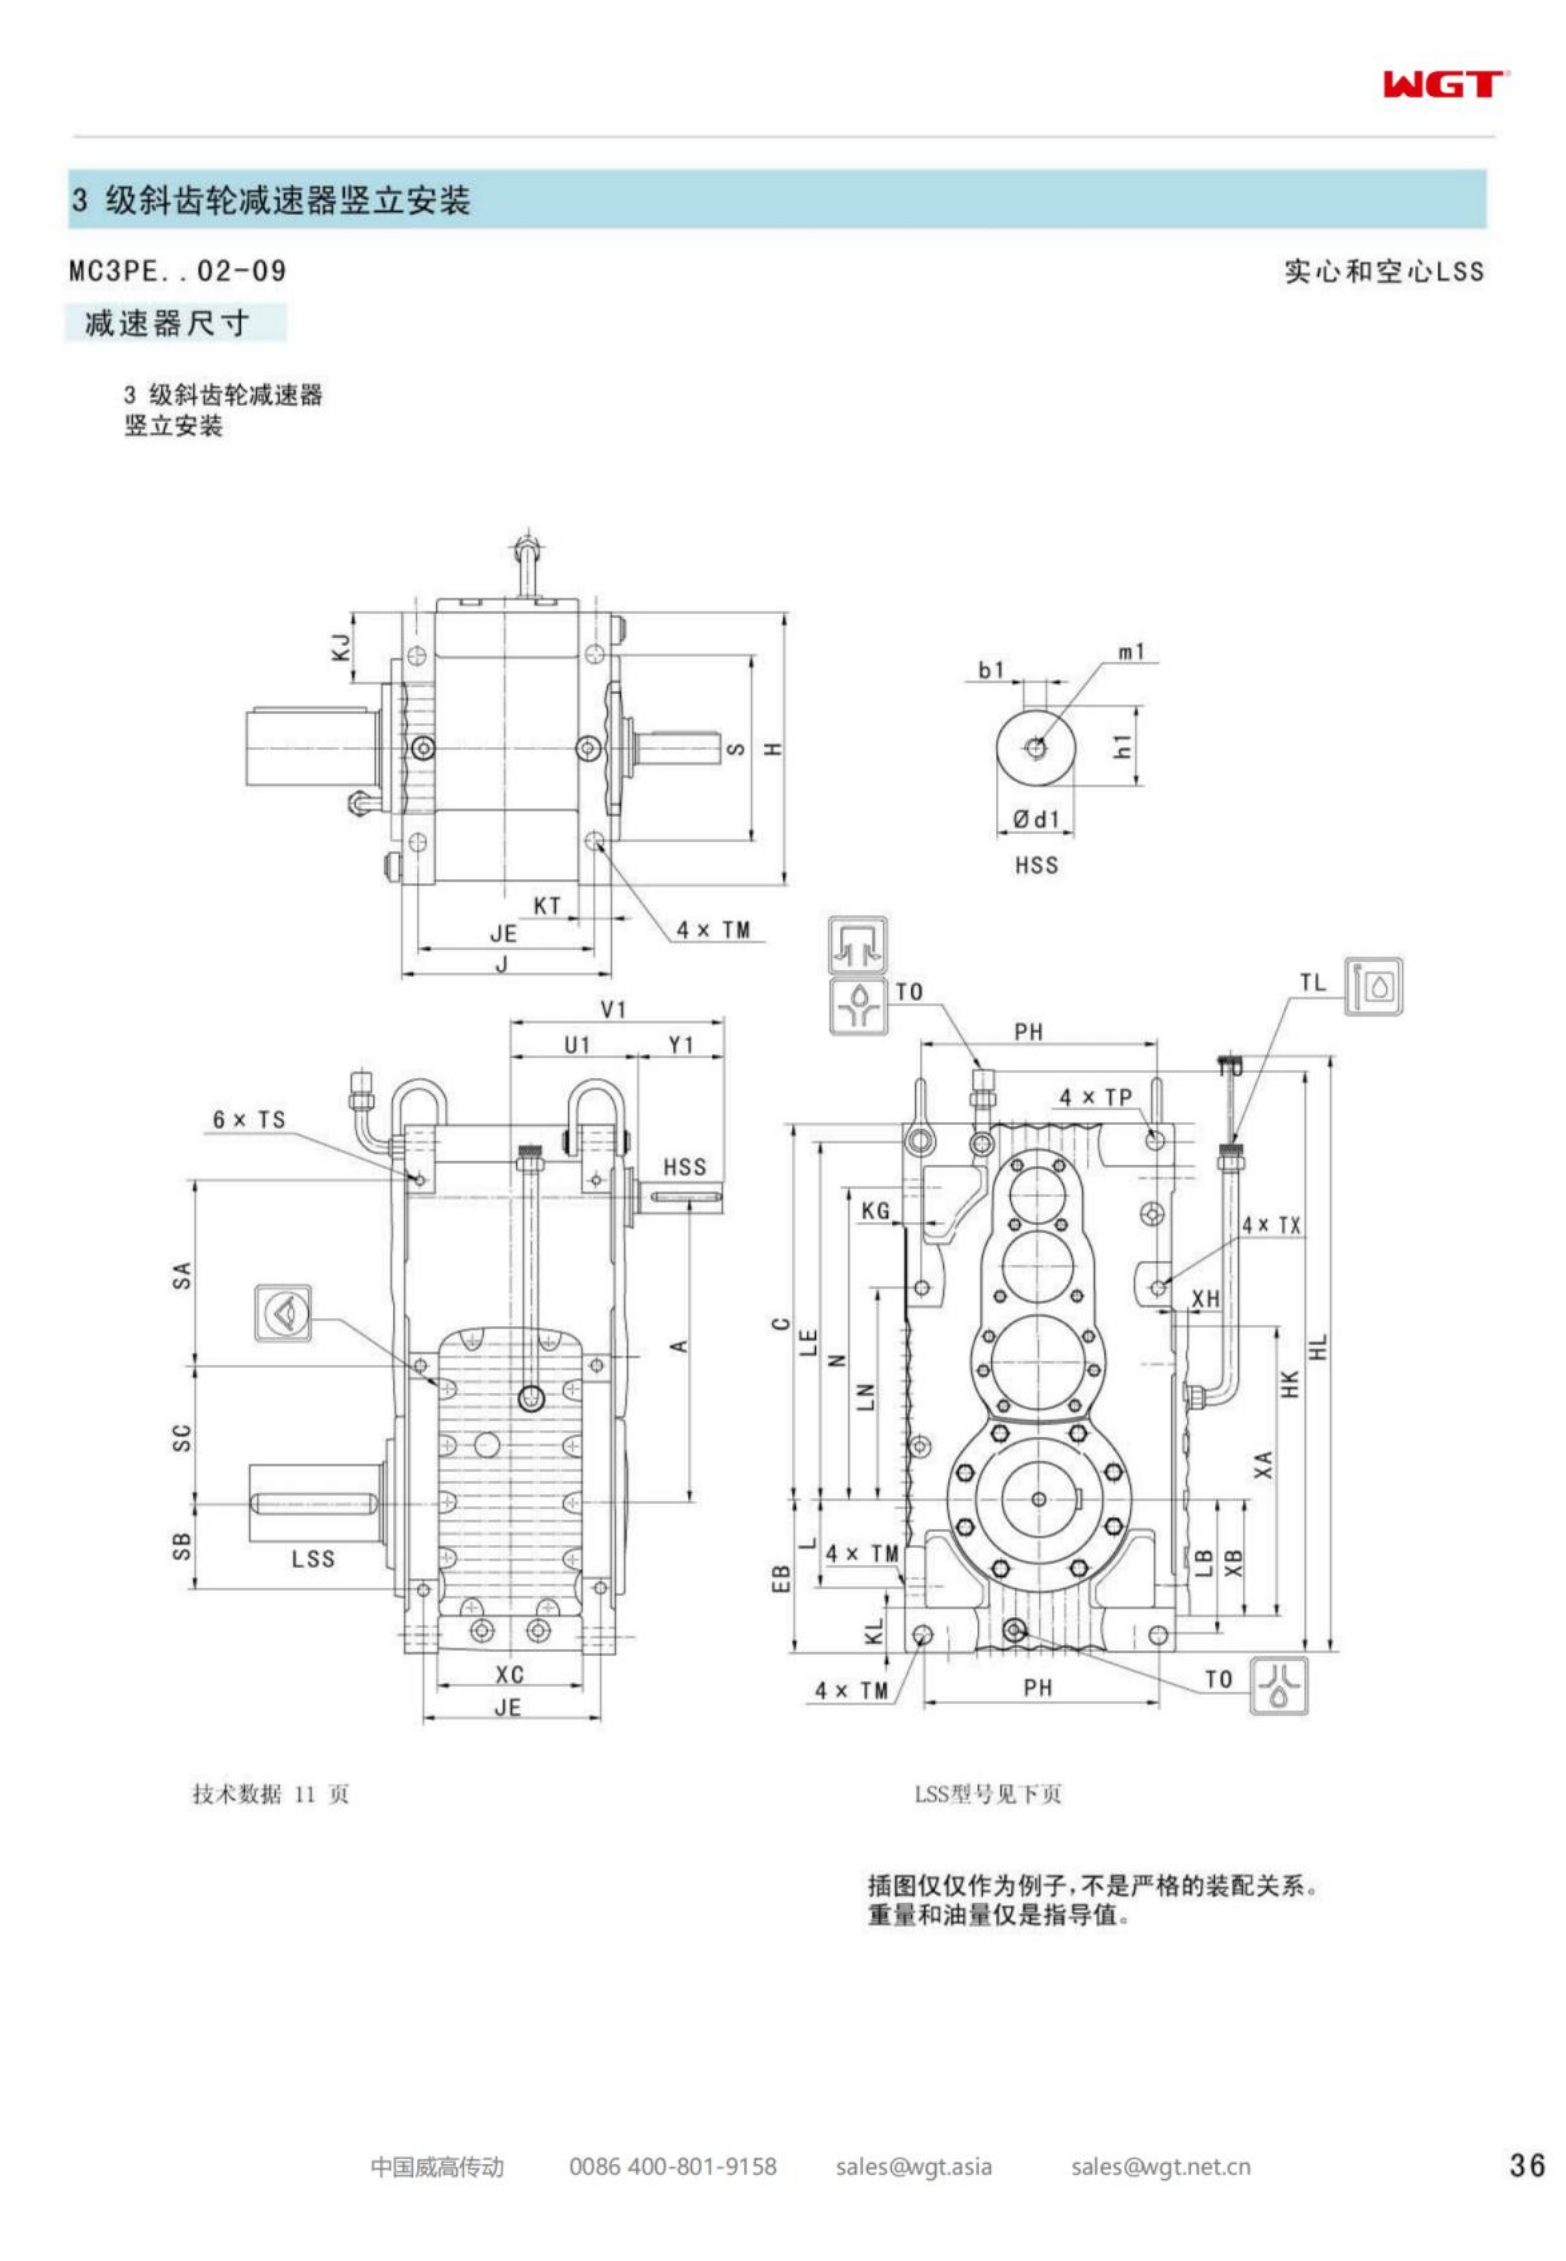 MC3PESF02 replaces _SEW_MC_Series gearbox (patent)